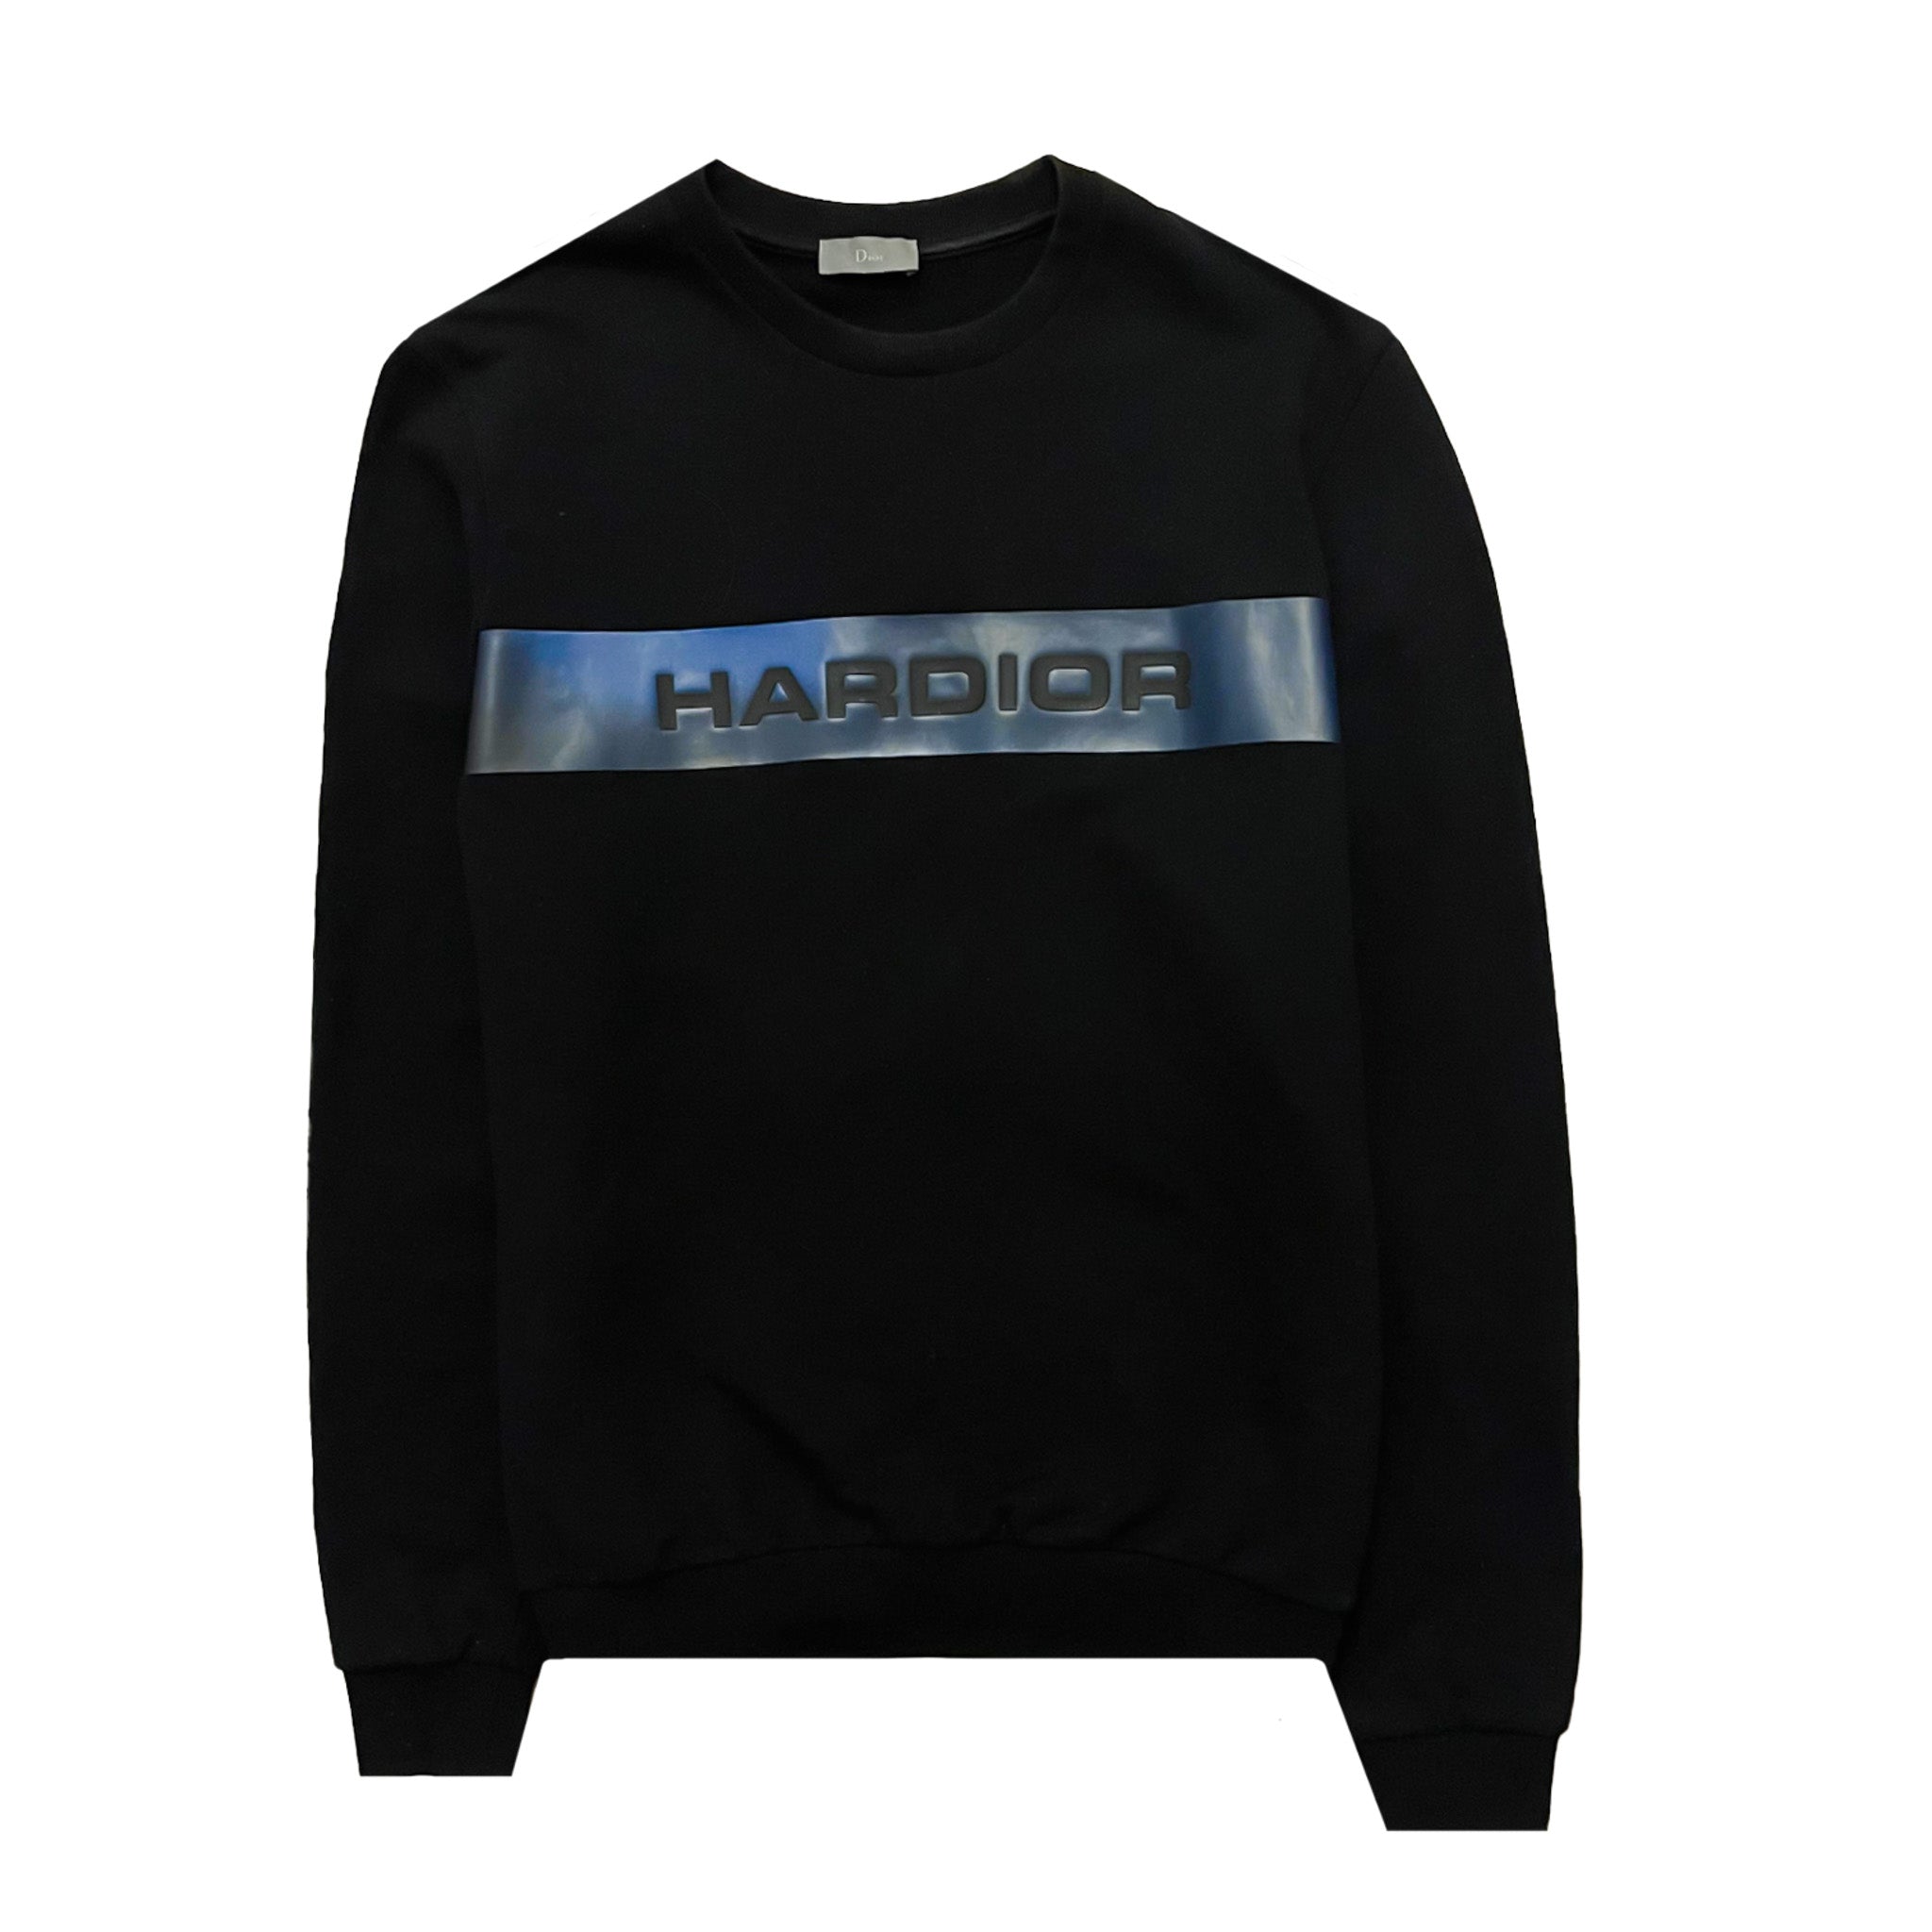 Dior Homme Hardior Logo Sweatshirt